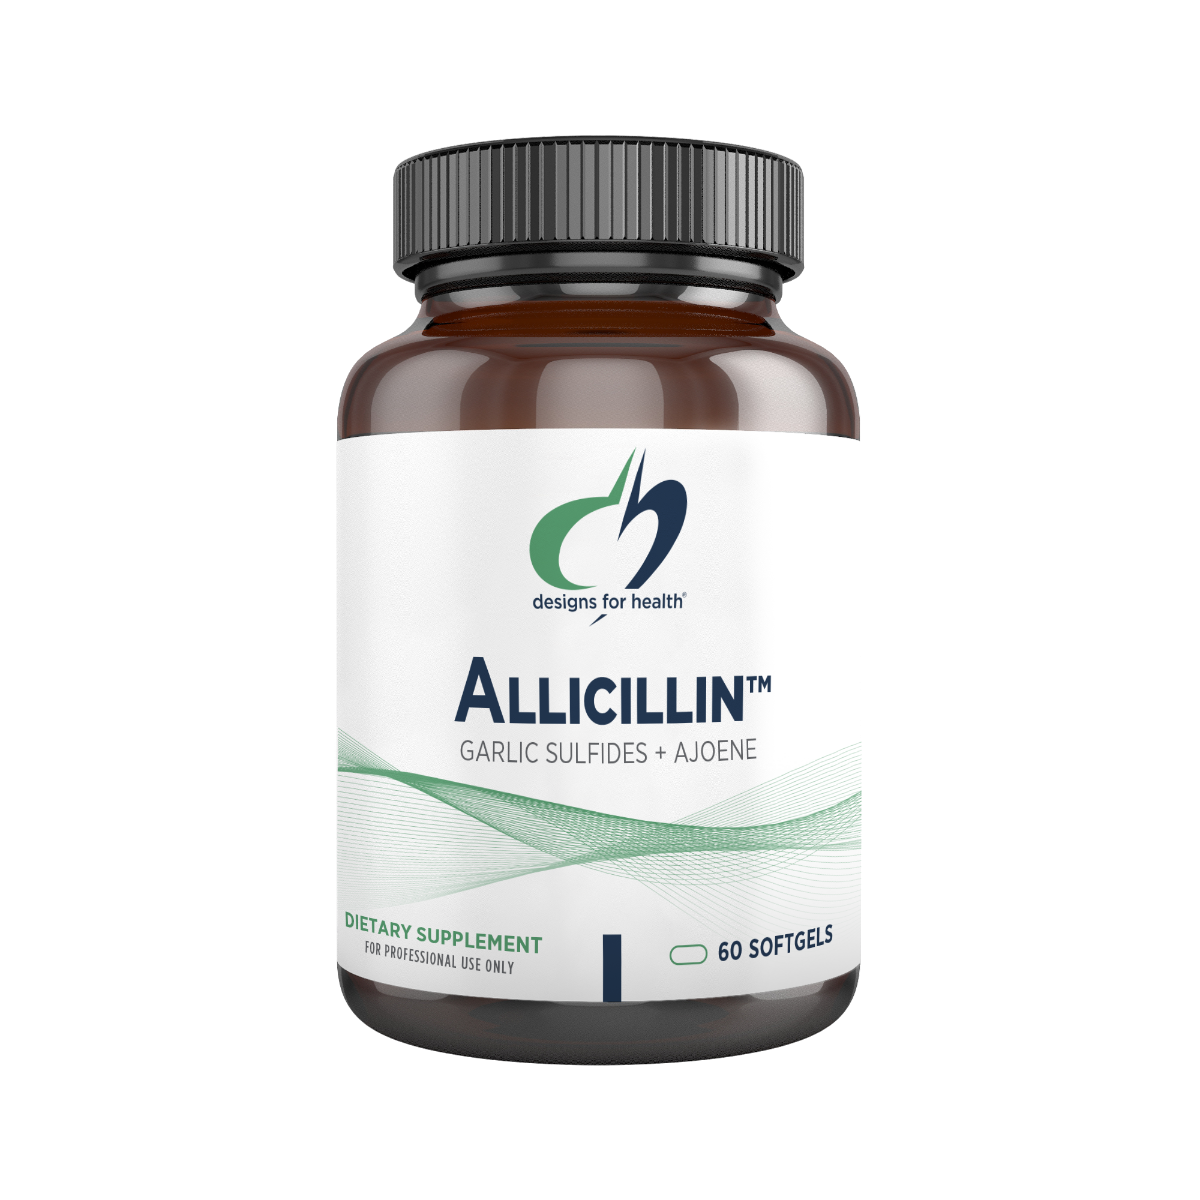 allicillin-garlic-supplement-with-parsley-oil-for-fresher-breath